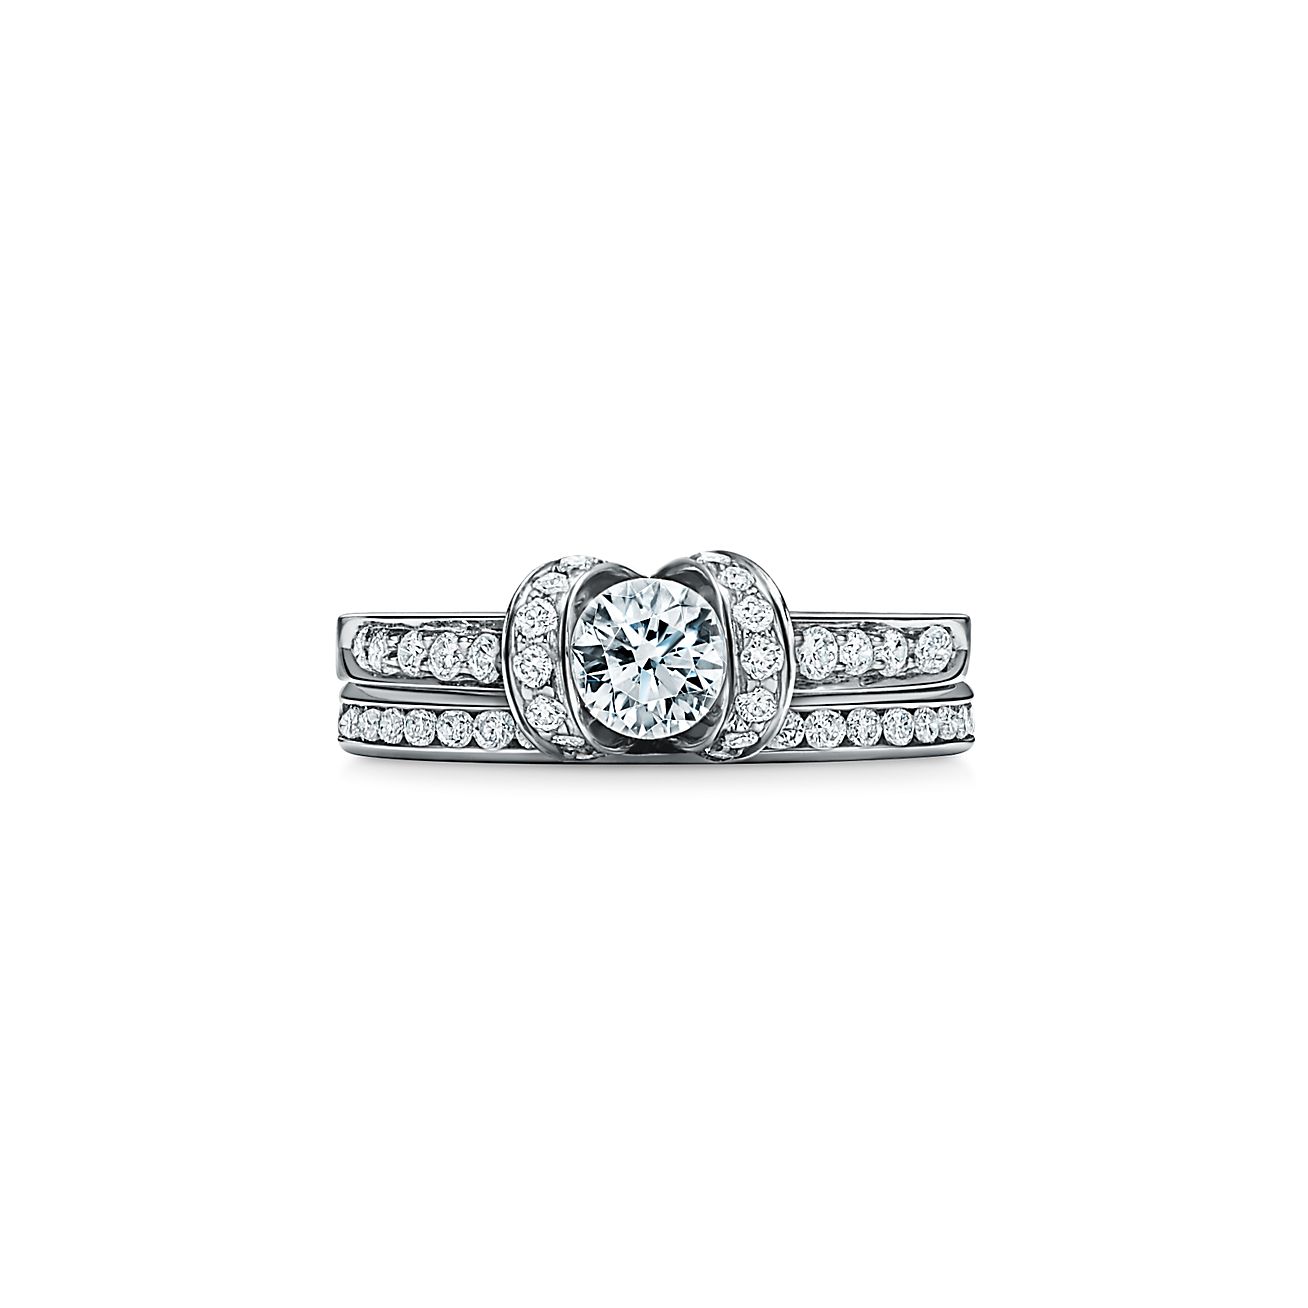 Tiffany Ribbon engagement ring in 